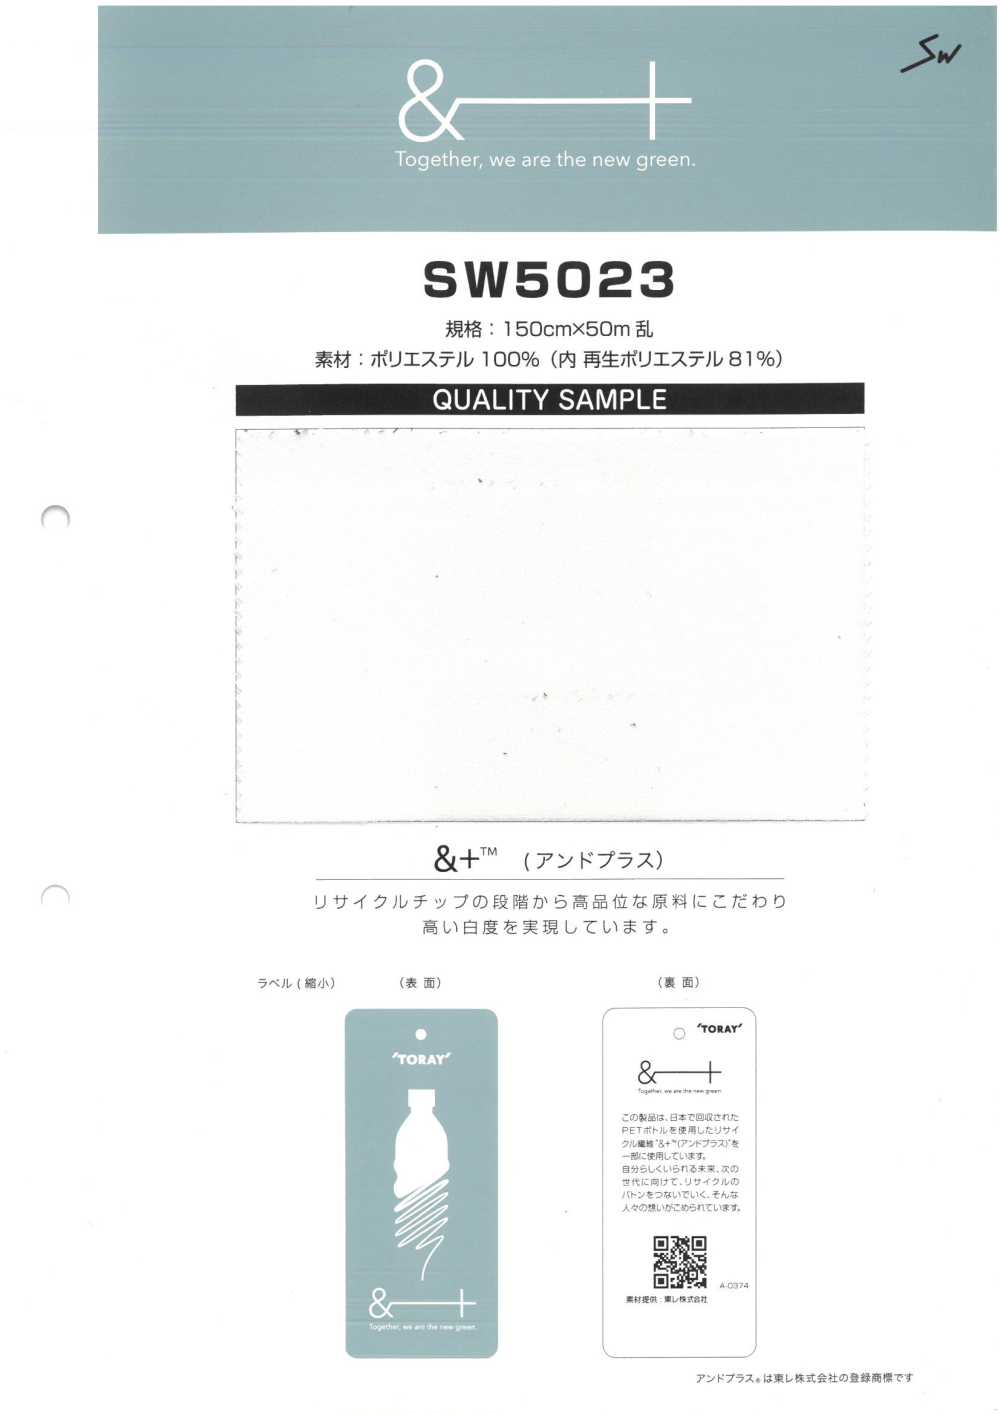 SW5023 Pilha Francesa De Poliéster Reciclado[Têxtil / Tecido] Fibras Sanwa